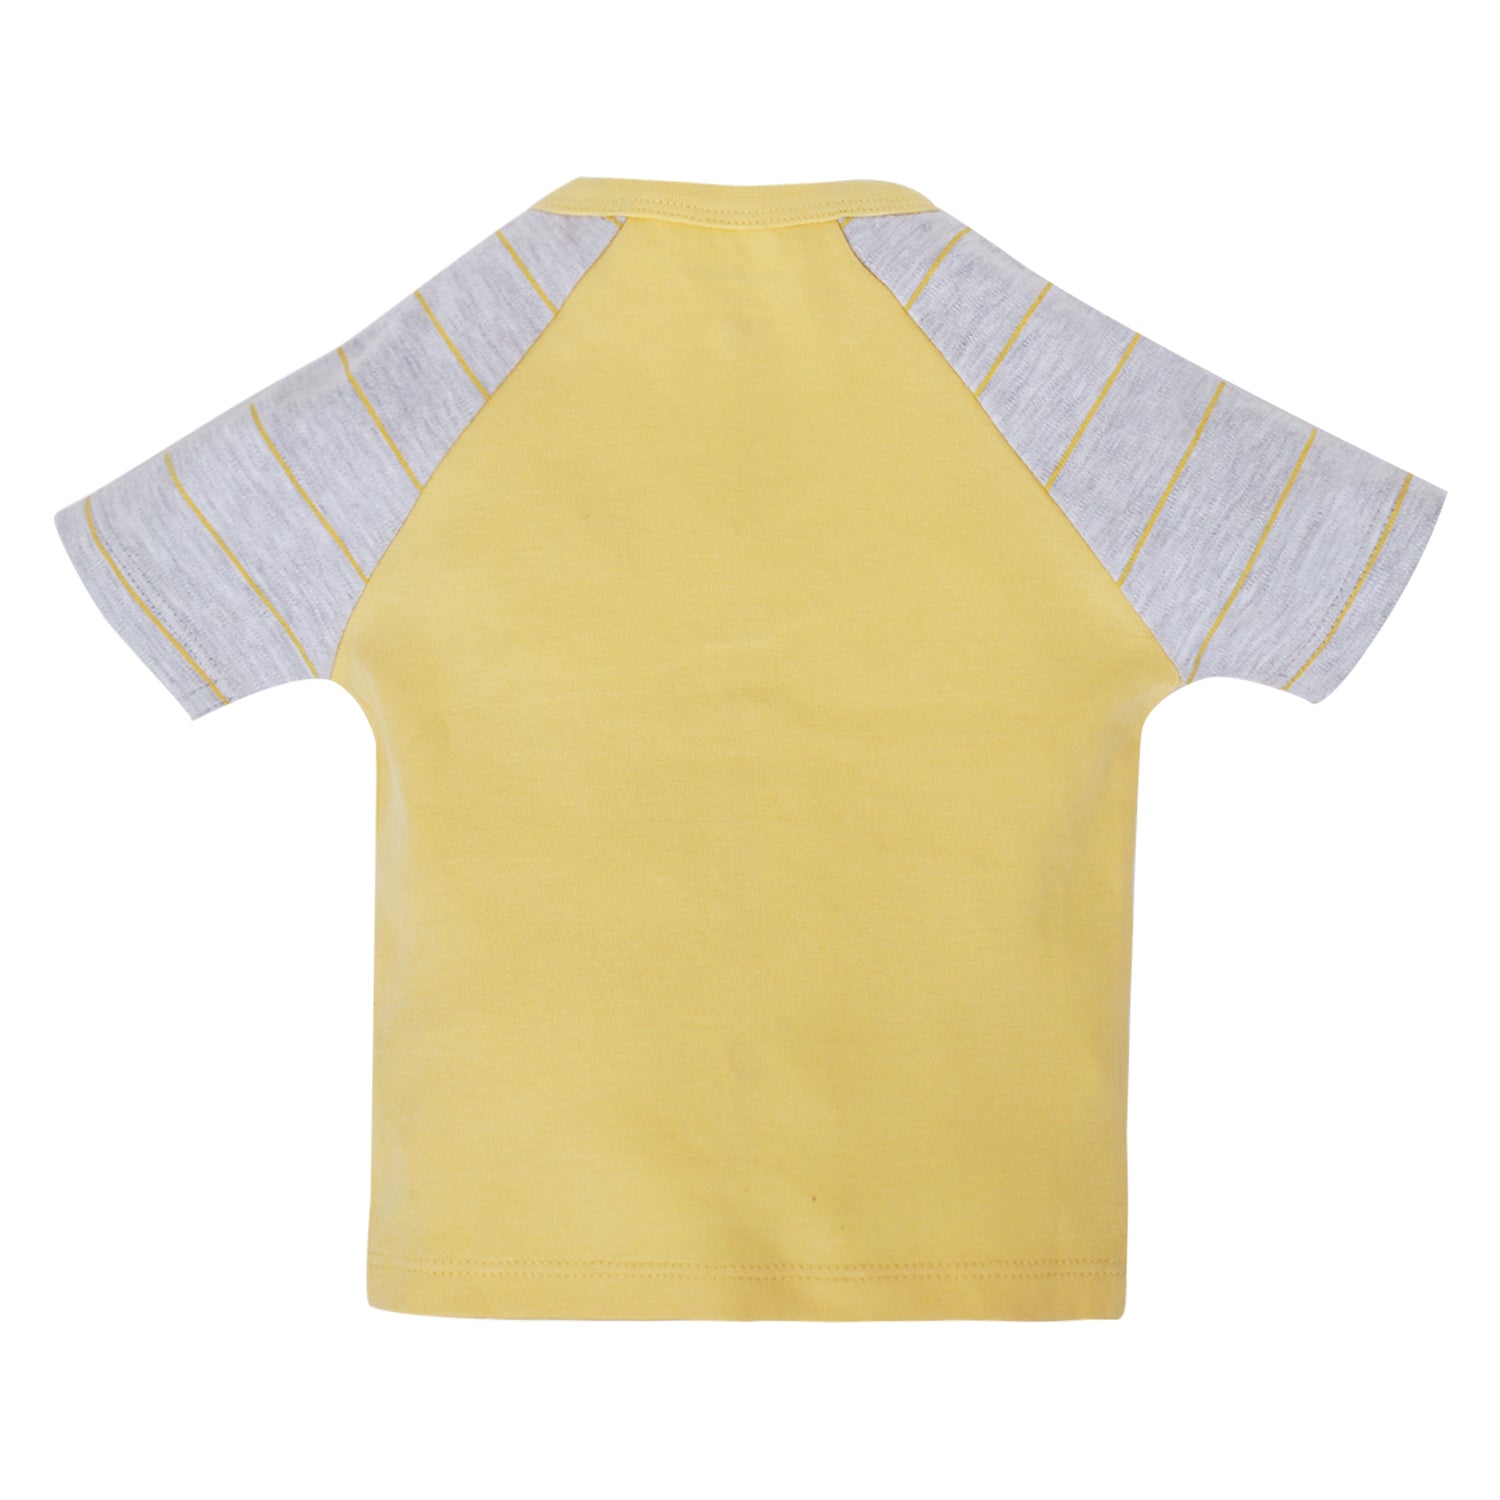 My Milestones T-shirt Half Sleeves Boys Yellow Grey/ Grey Navy Blue-2Pc Pack